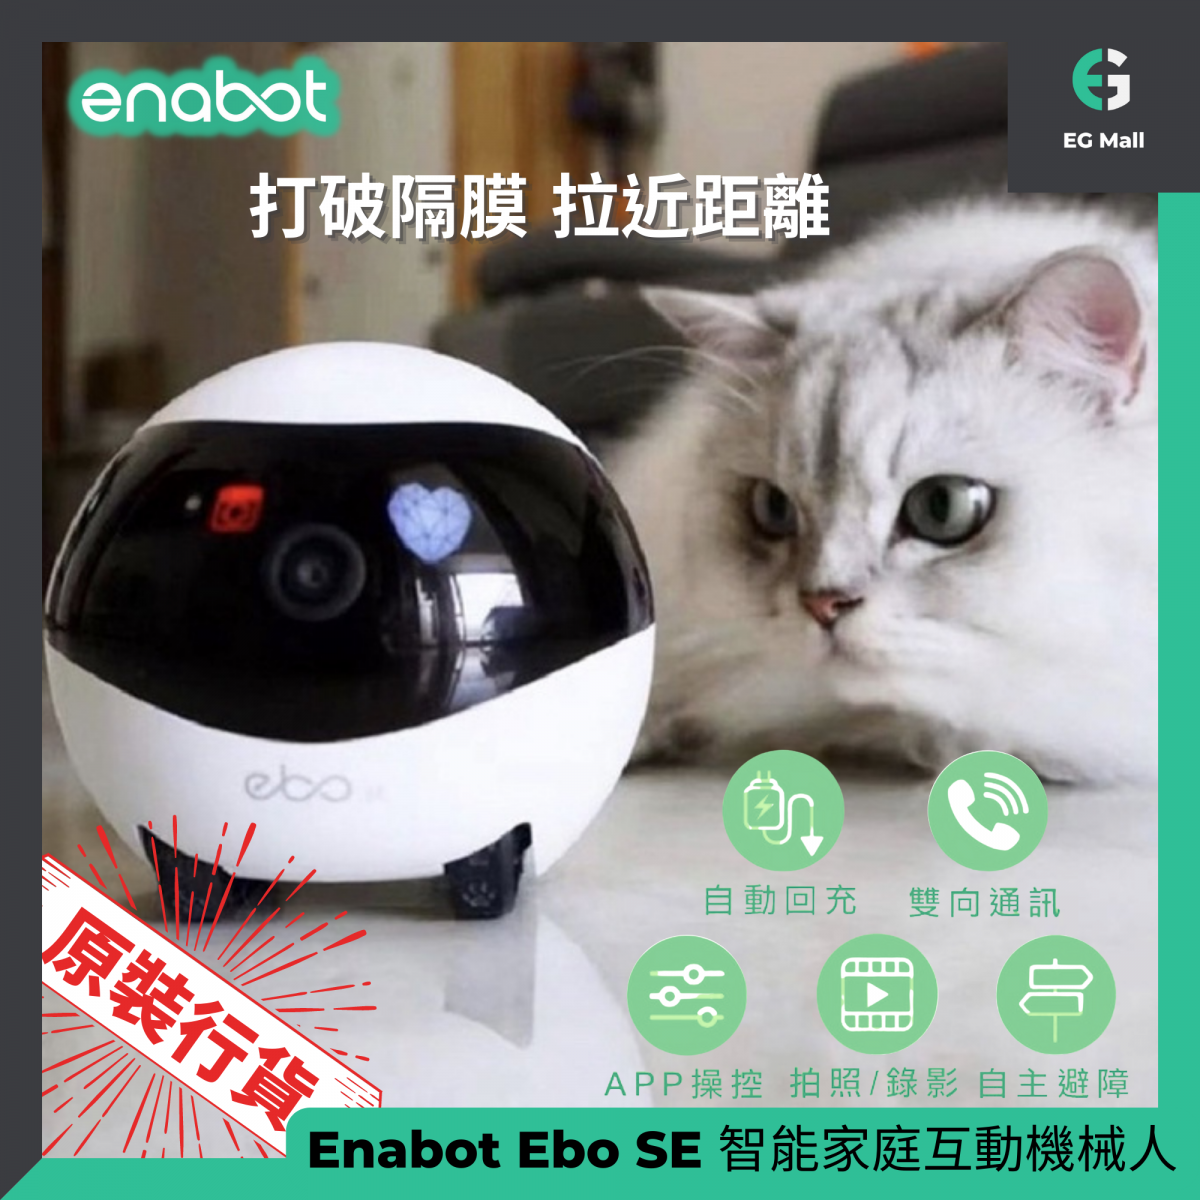 Enabot Ebo SE 智能家庭互動機械人 寵物 CCTV 寵物錄影機 貓 狗 毛孩錄影機 自動巡航 實時監控 收音咪 揚聲器 實時通訊 雙頻 Wi Fi